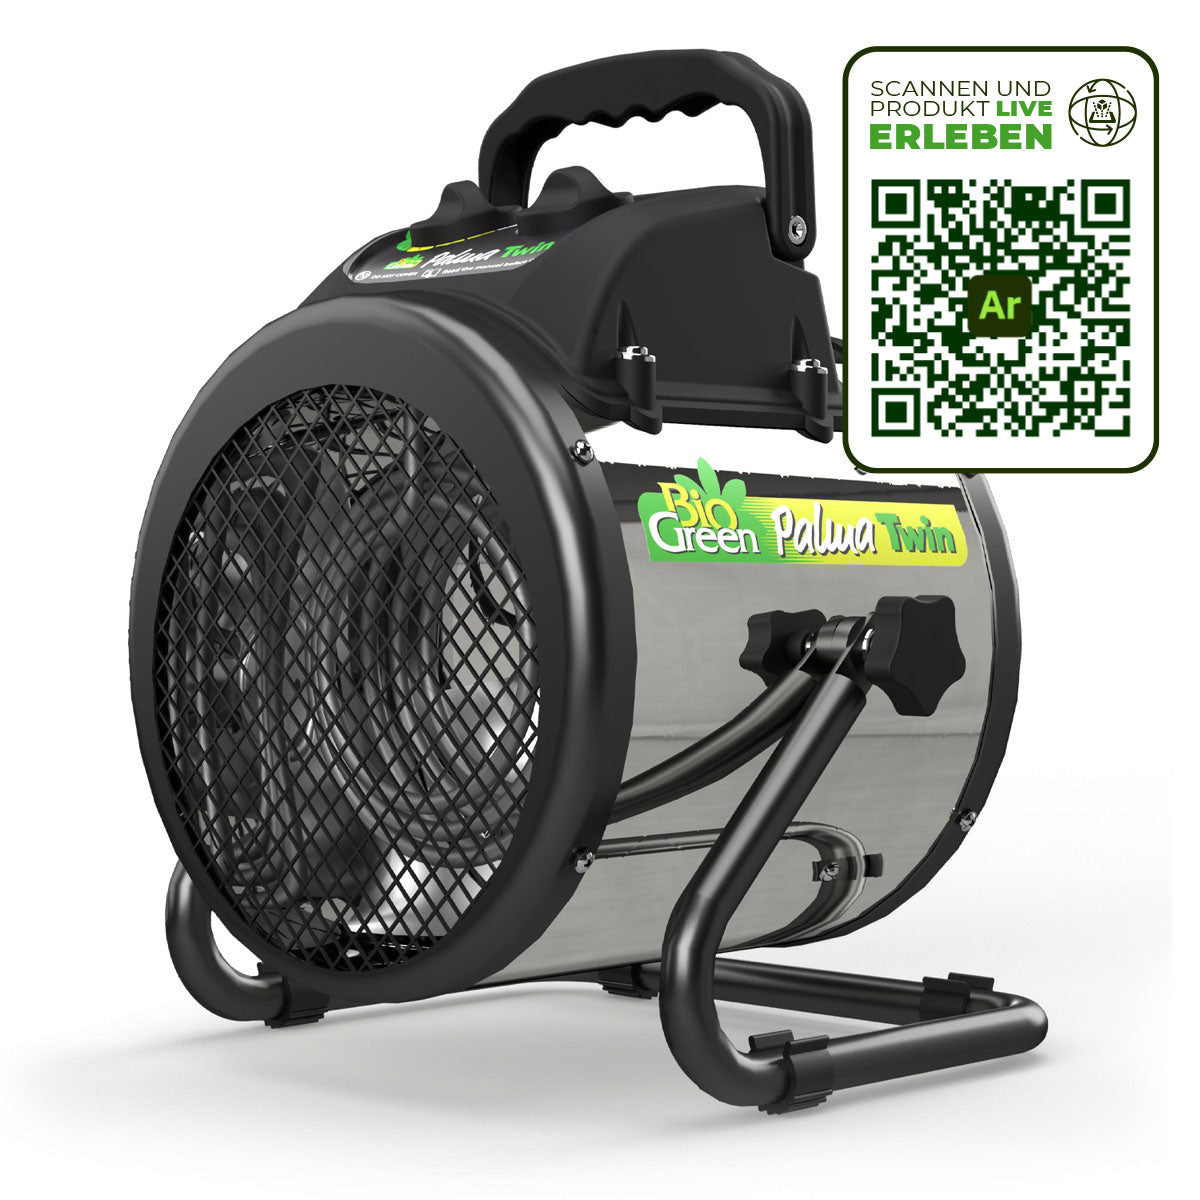 Bio Green Heizlüfter / Elektro-Gebläse-Heizung Palma Twin mit manuellem Thermostat - AR-Code